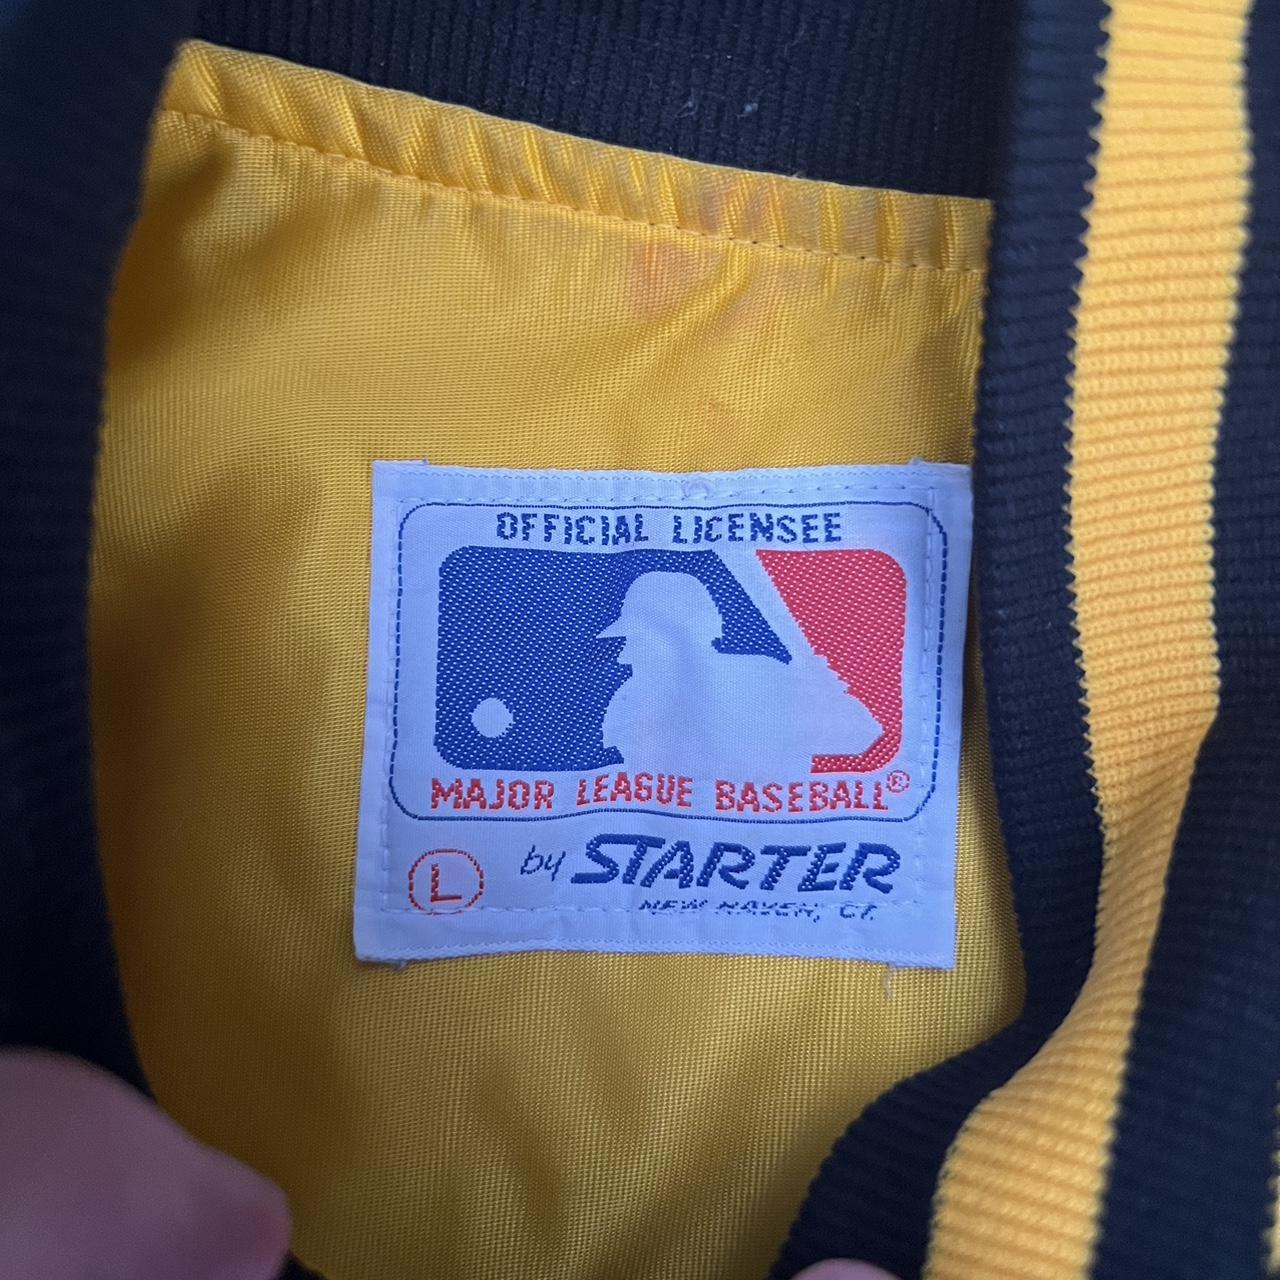 Vintage Pittsburgh Pirates Starter Jacket Detailed - Depop